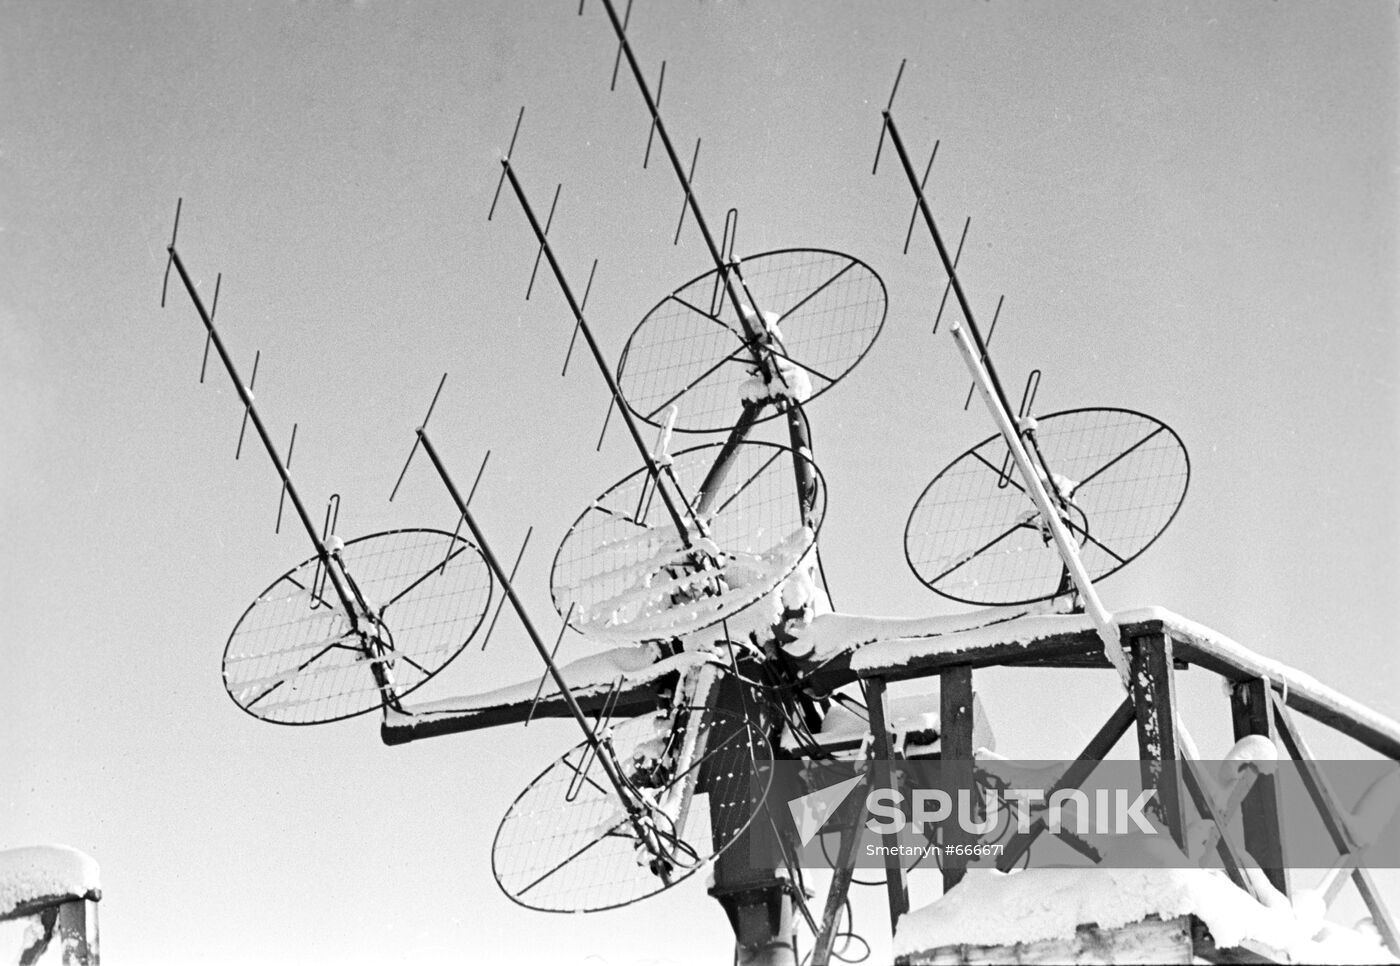 Antenna that tracks the motion of radiosondes